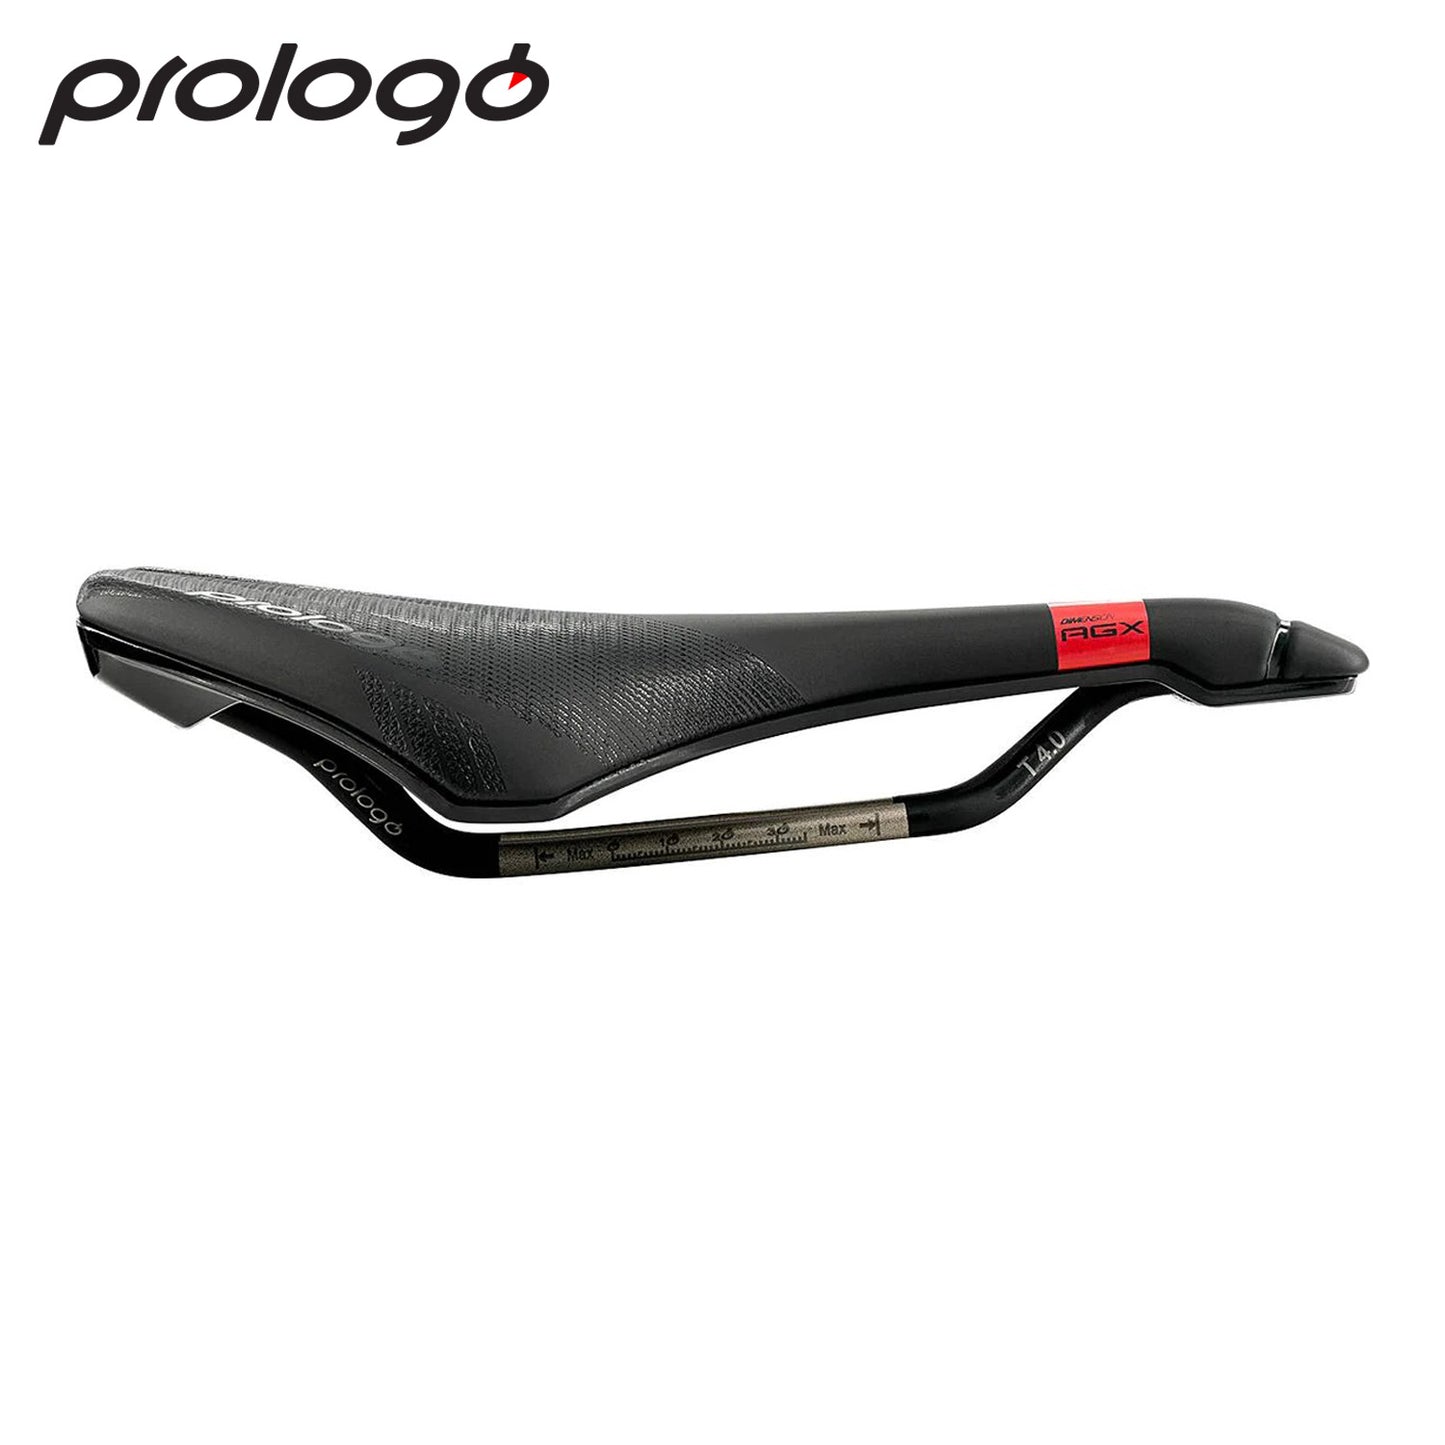 Prologo Dimension AGX Bicycle Saddle - Black